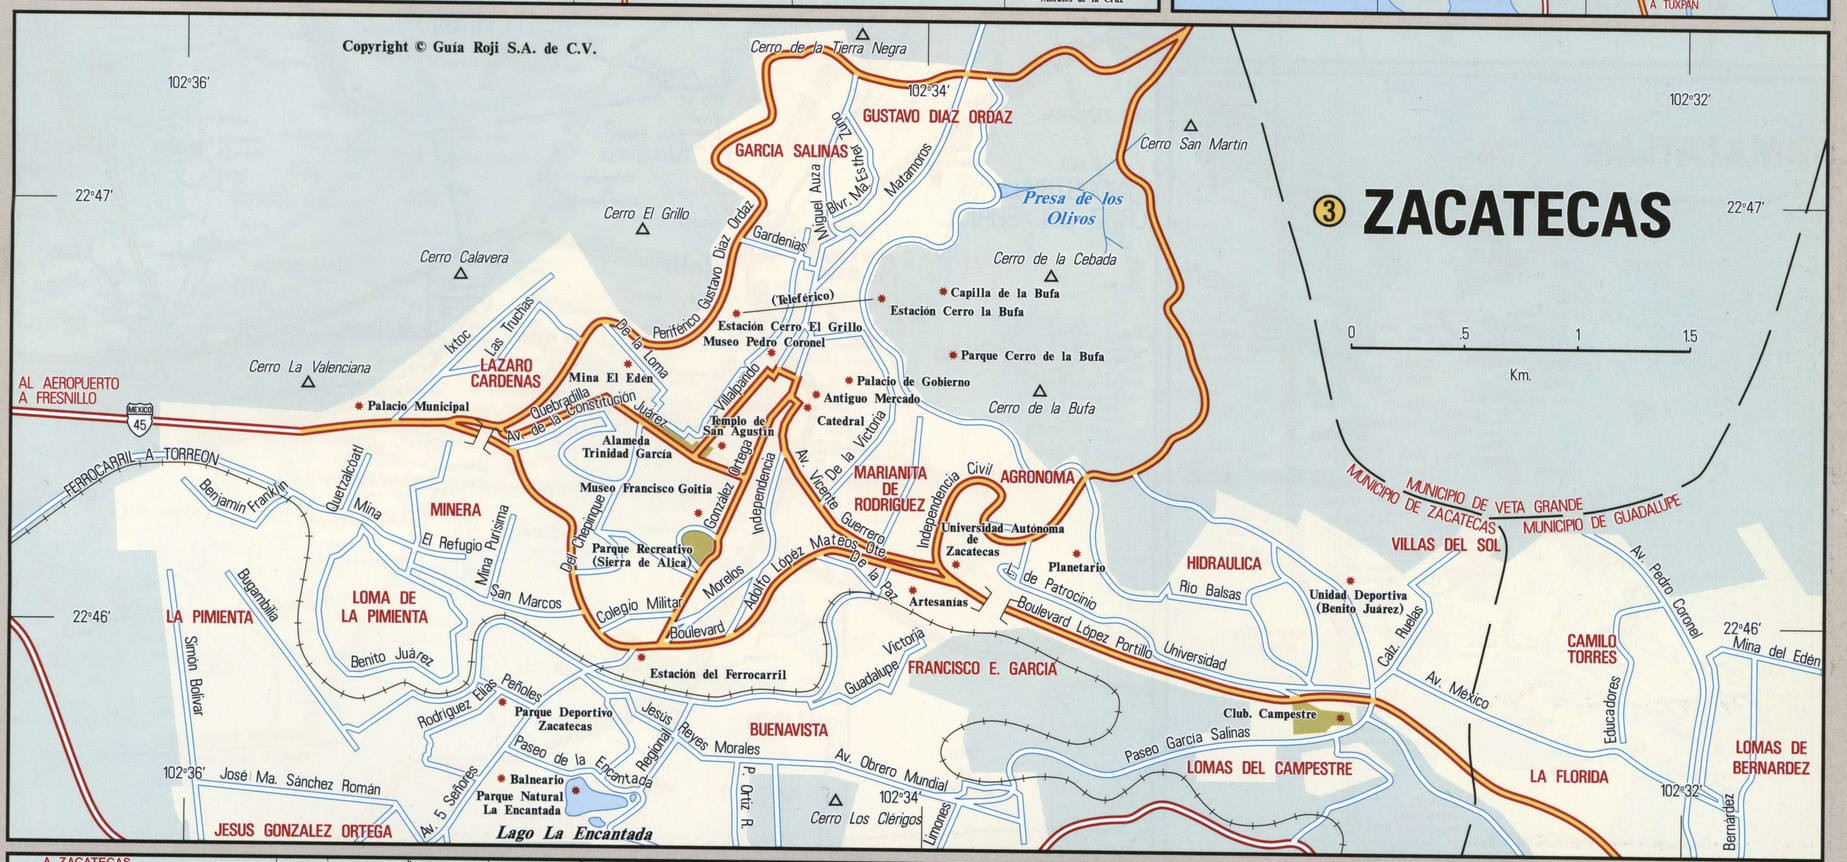 Zacatecas city map